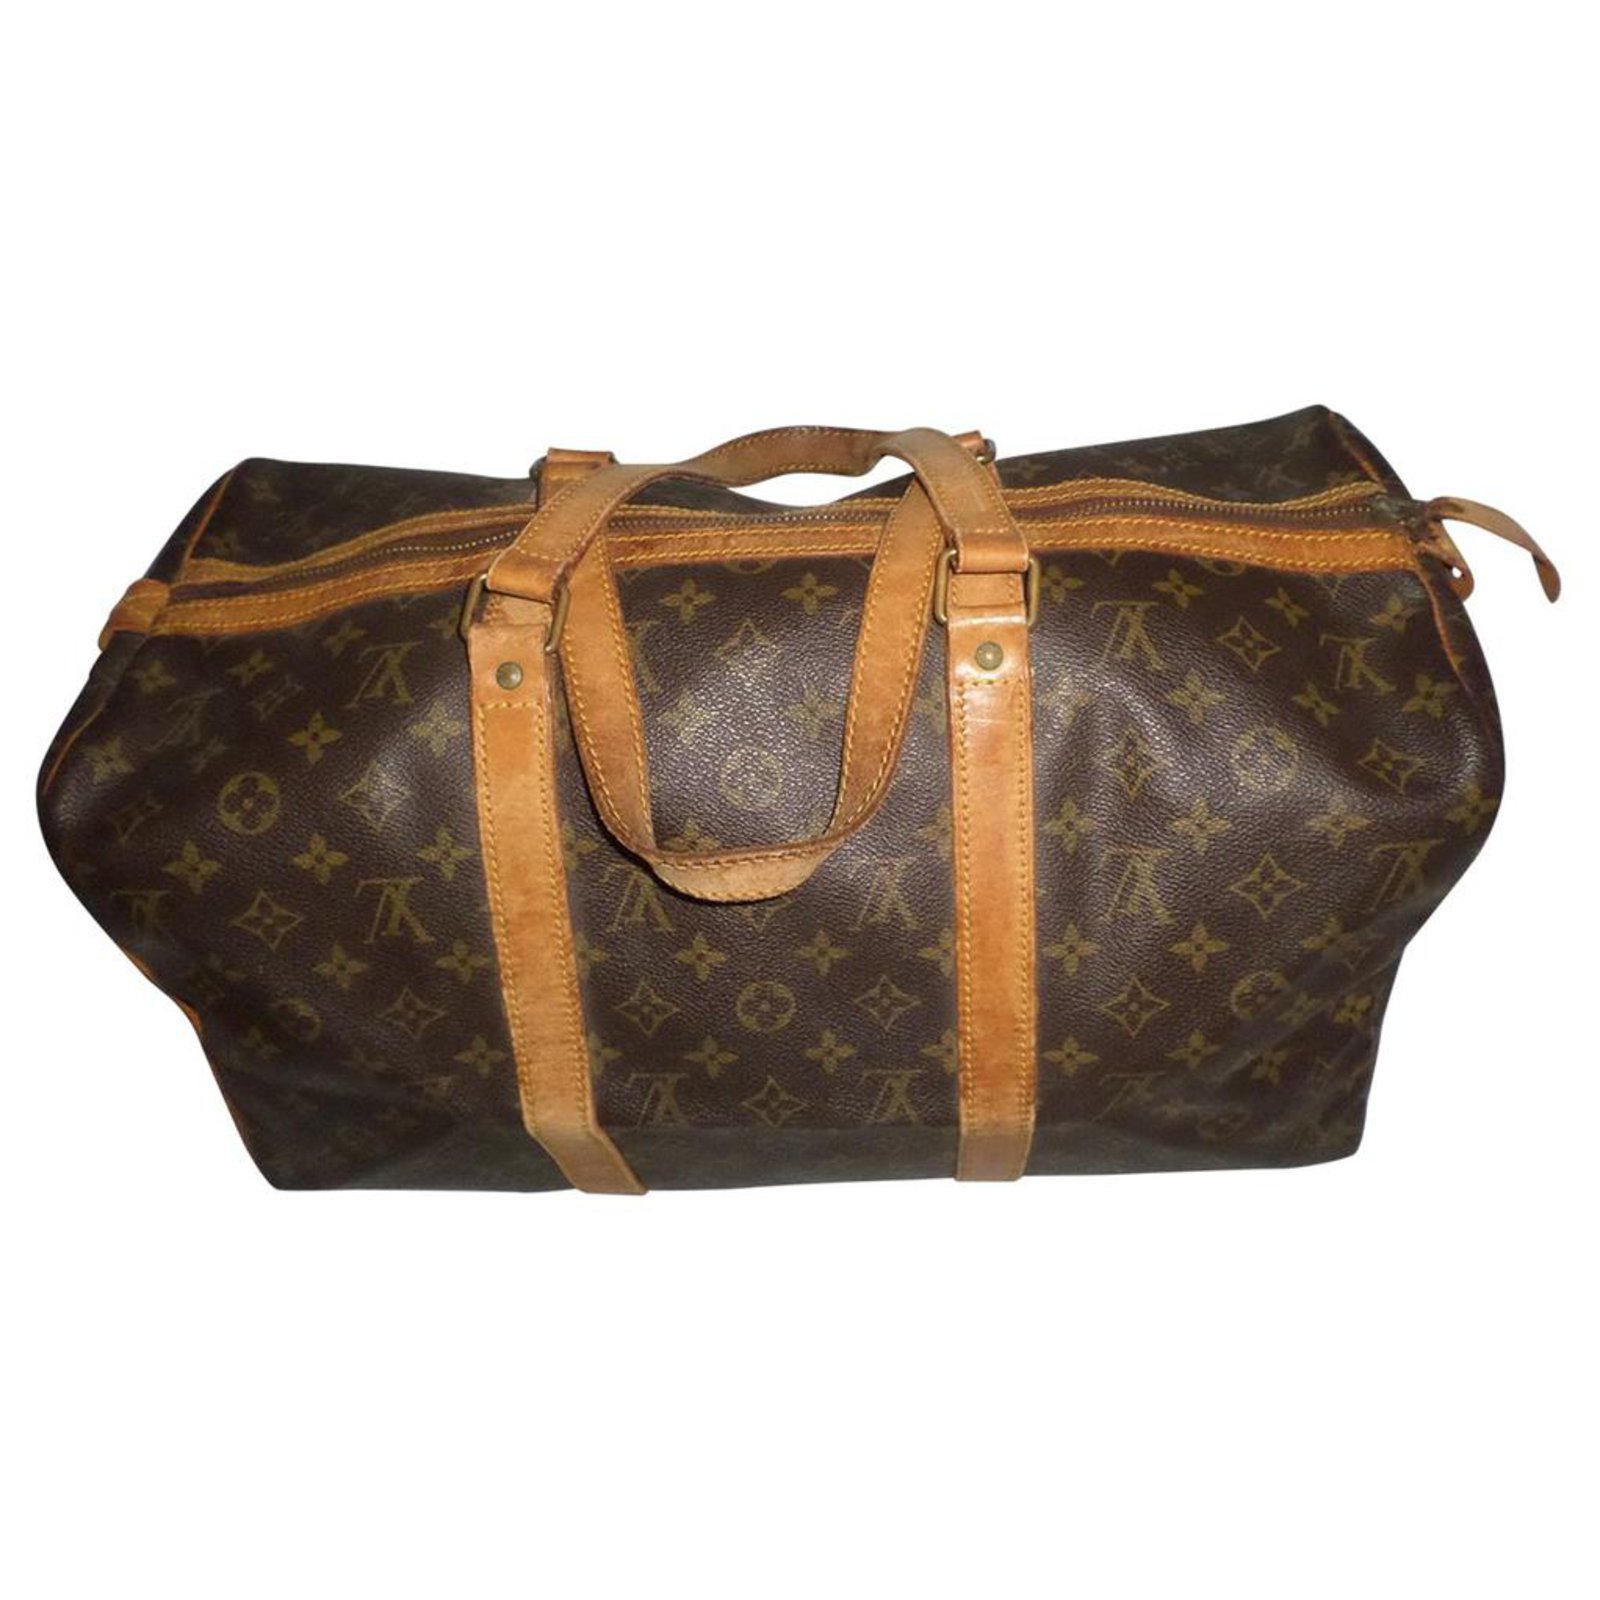 Keepall fabric travel bag